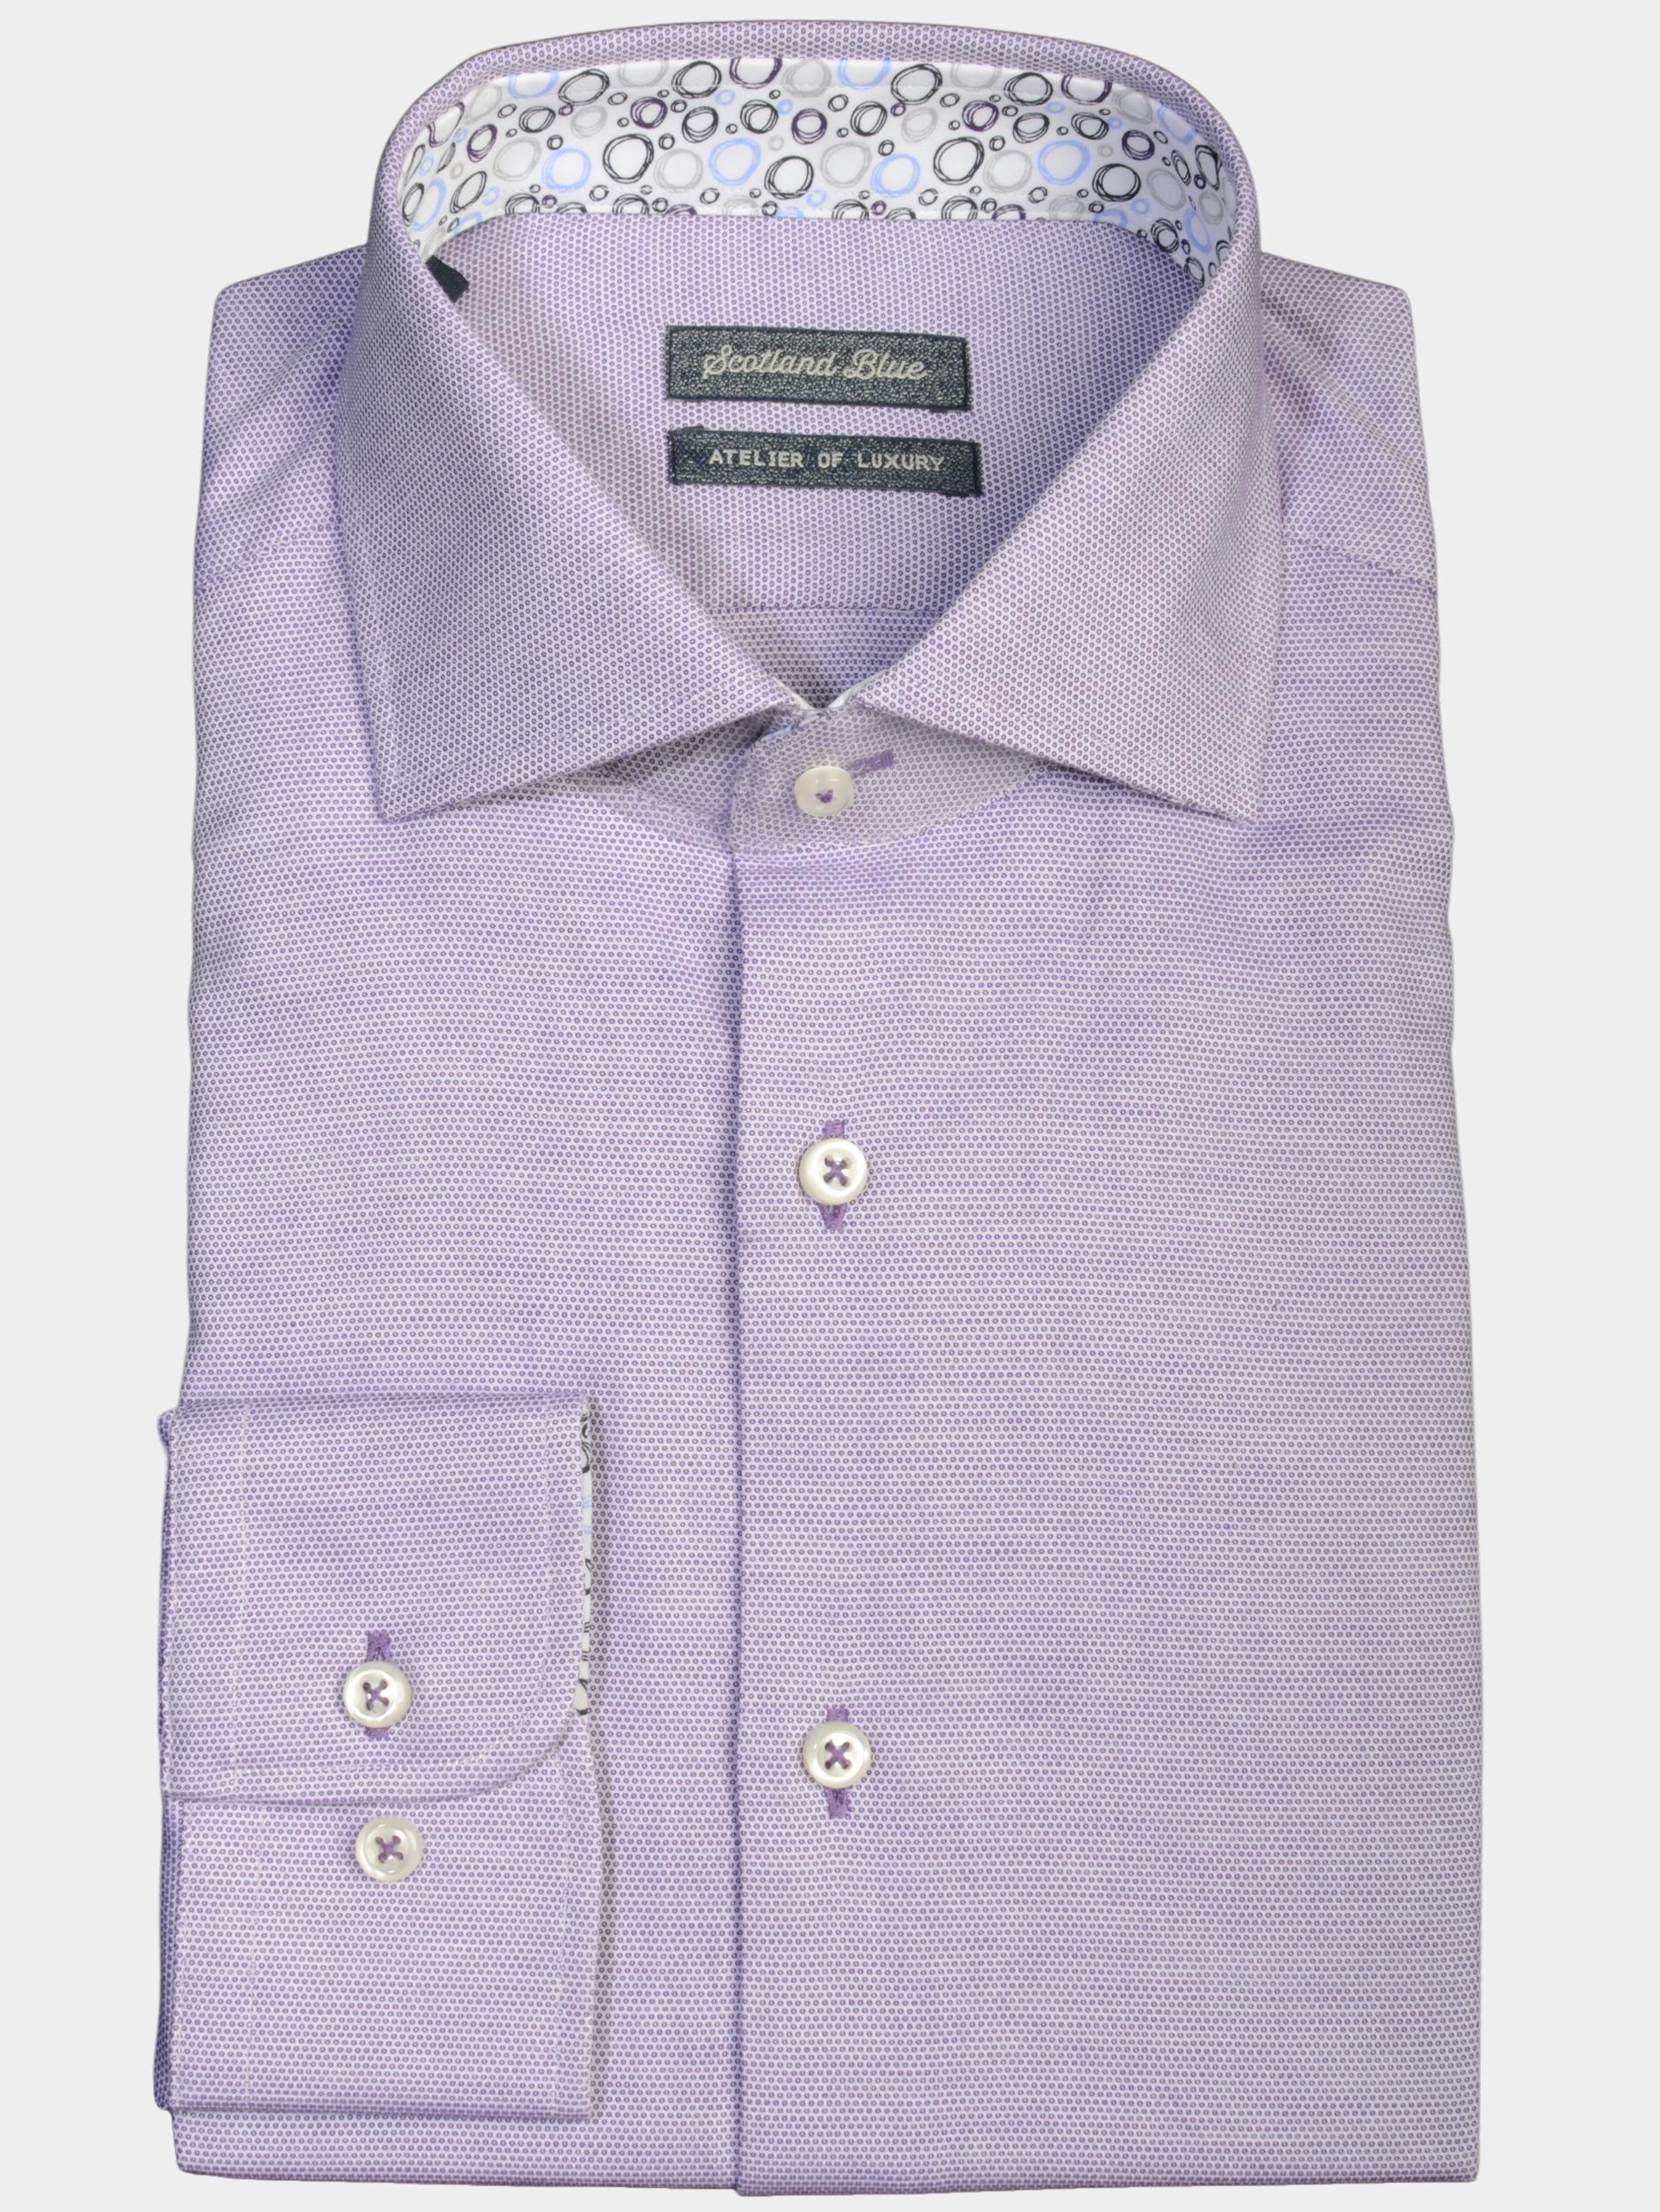 Scotland Blue Business hemd lange mouw Paars Wesley Long Sleeve Dressual S 19106WE16SB/770 purple